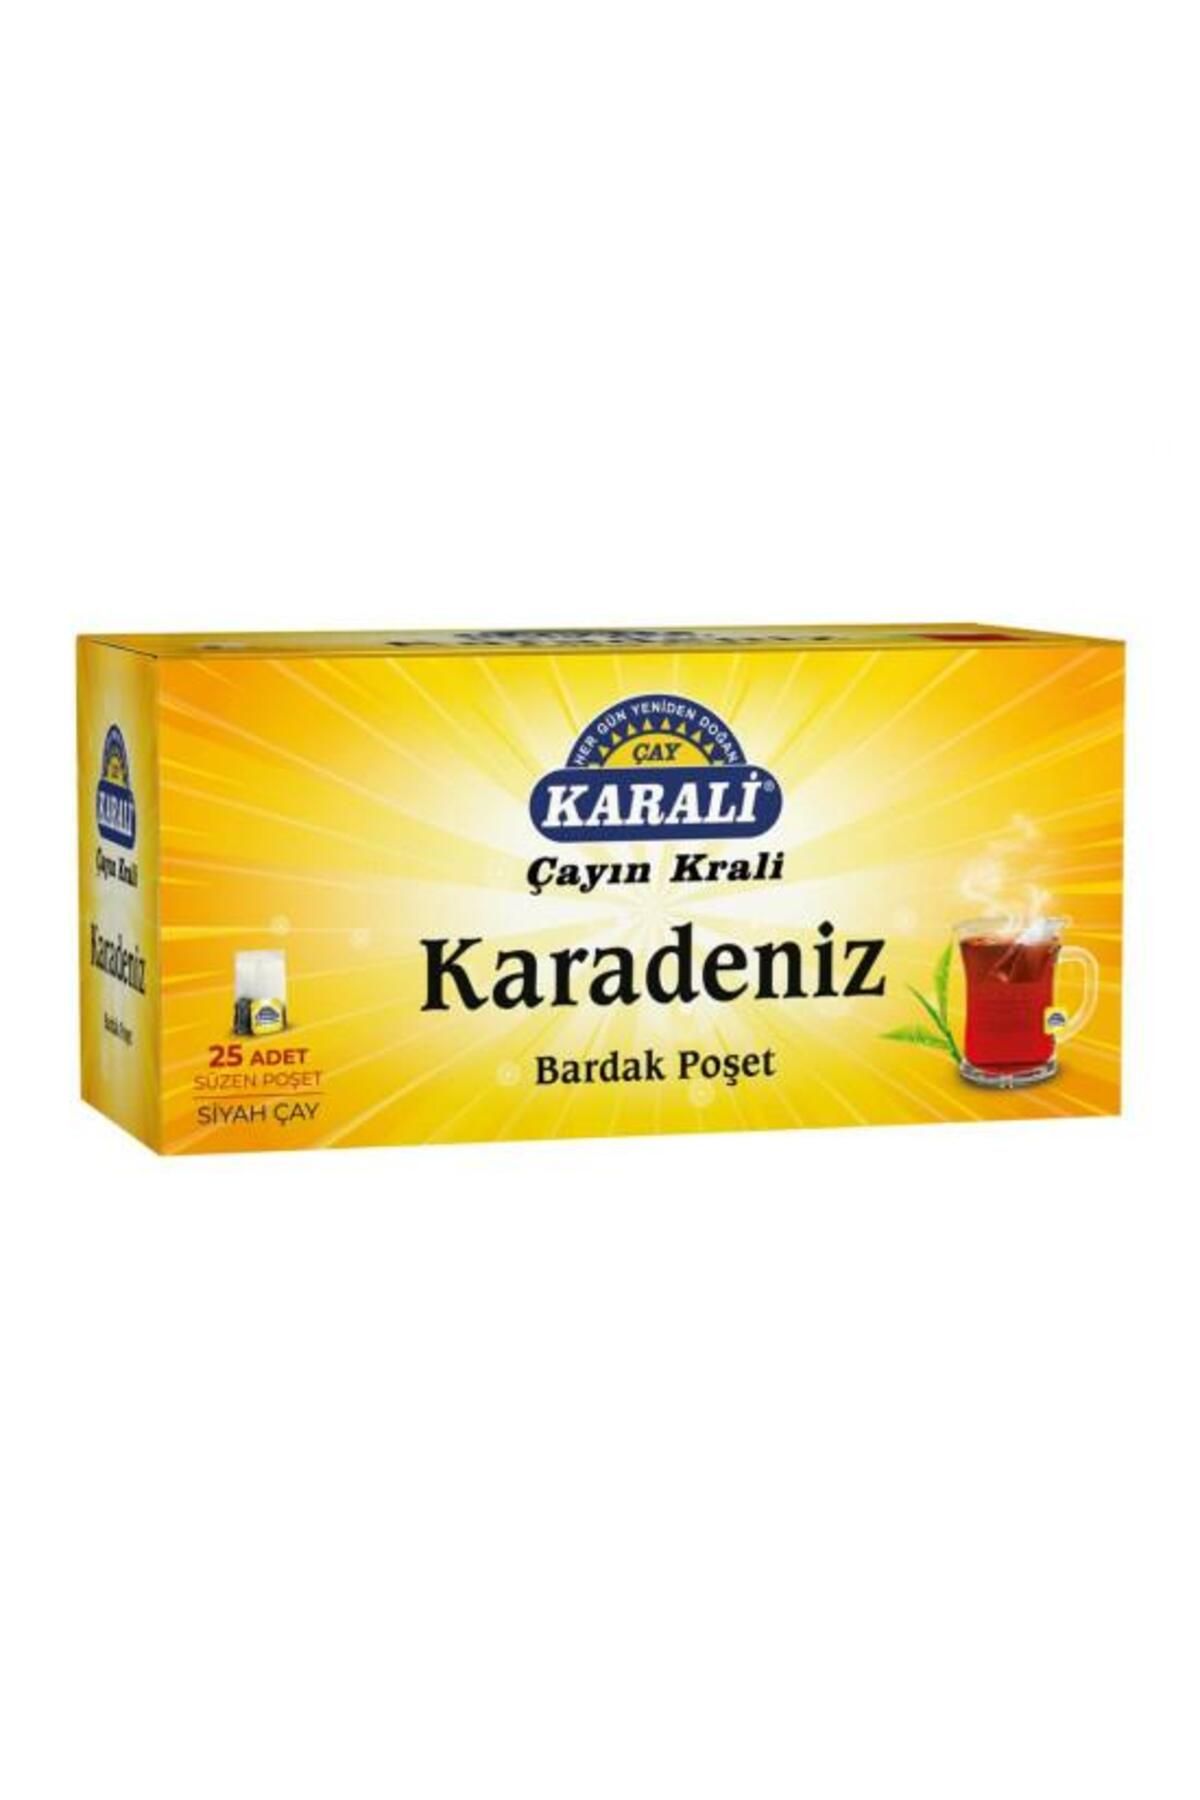 Karali Çay Karali Karadeniz Bardak Poşet 2 gr 25 Li X 2 Paket